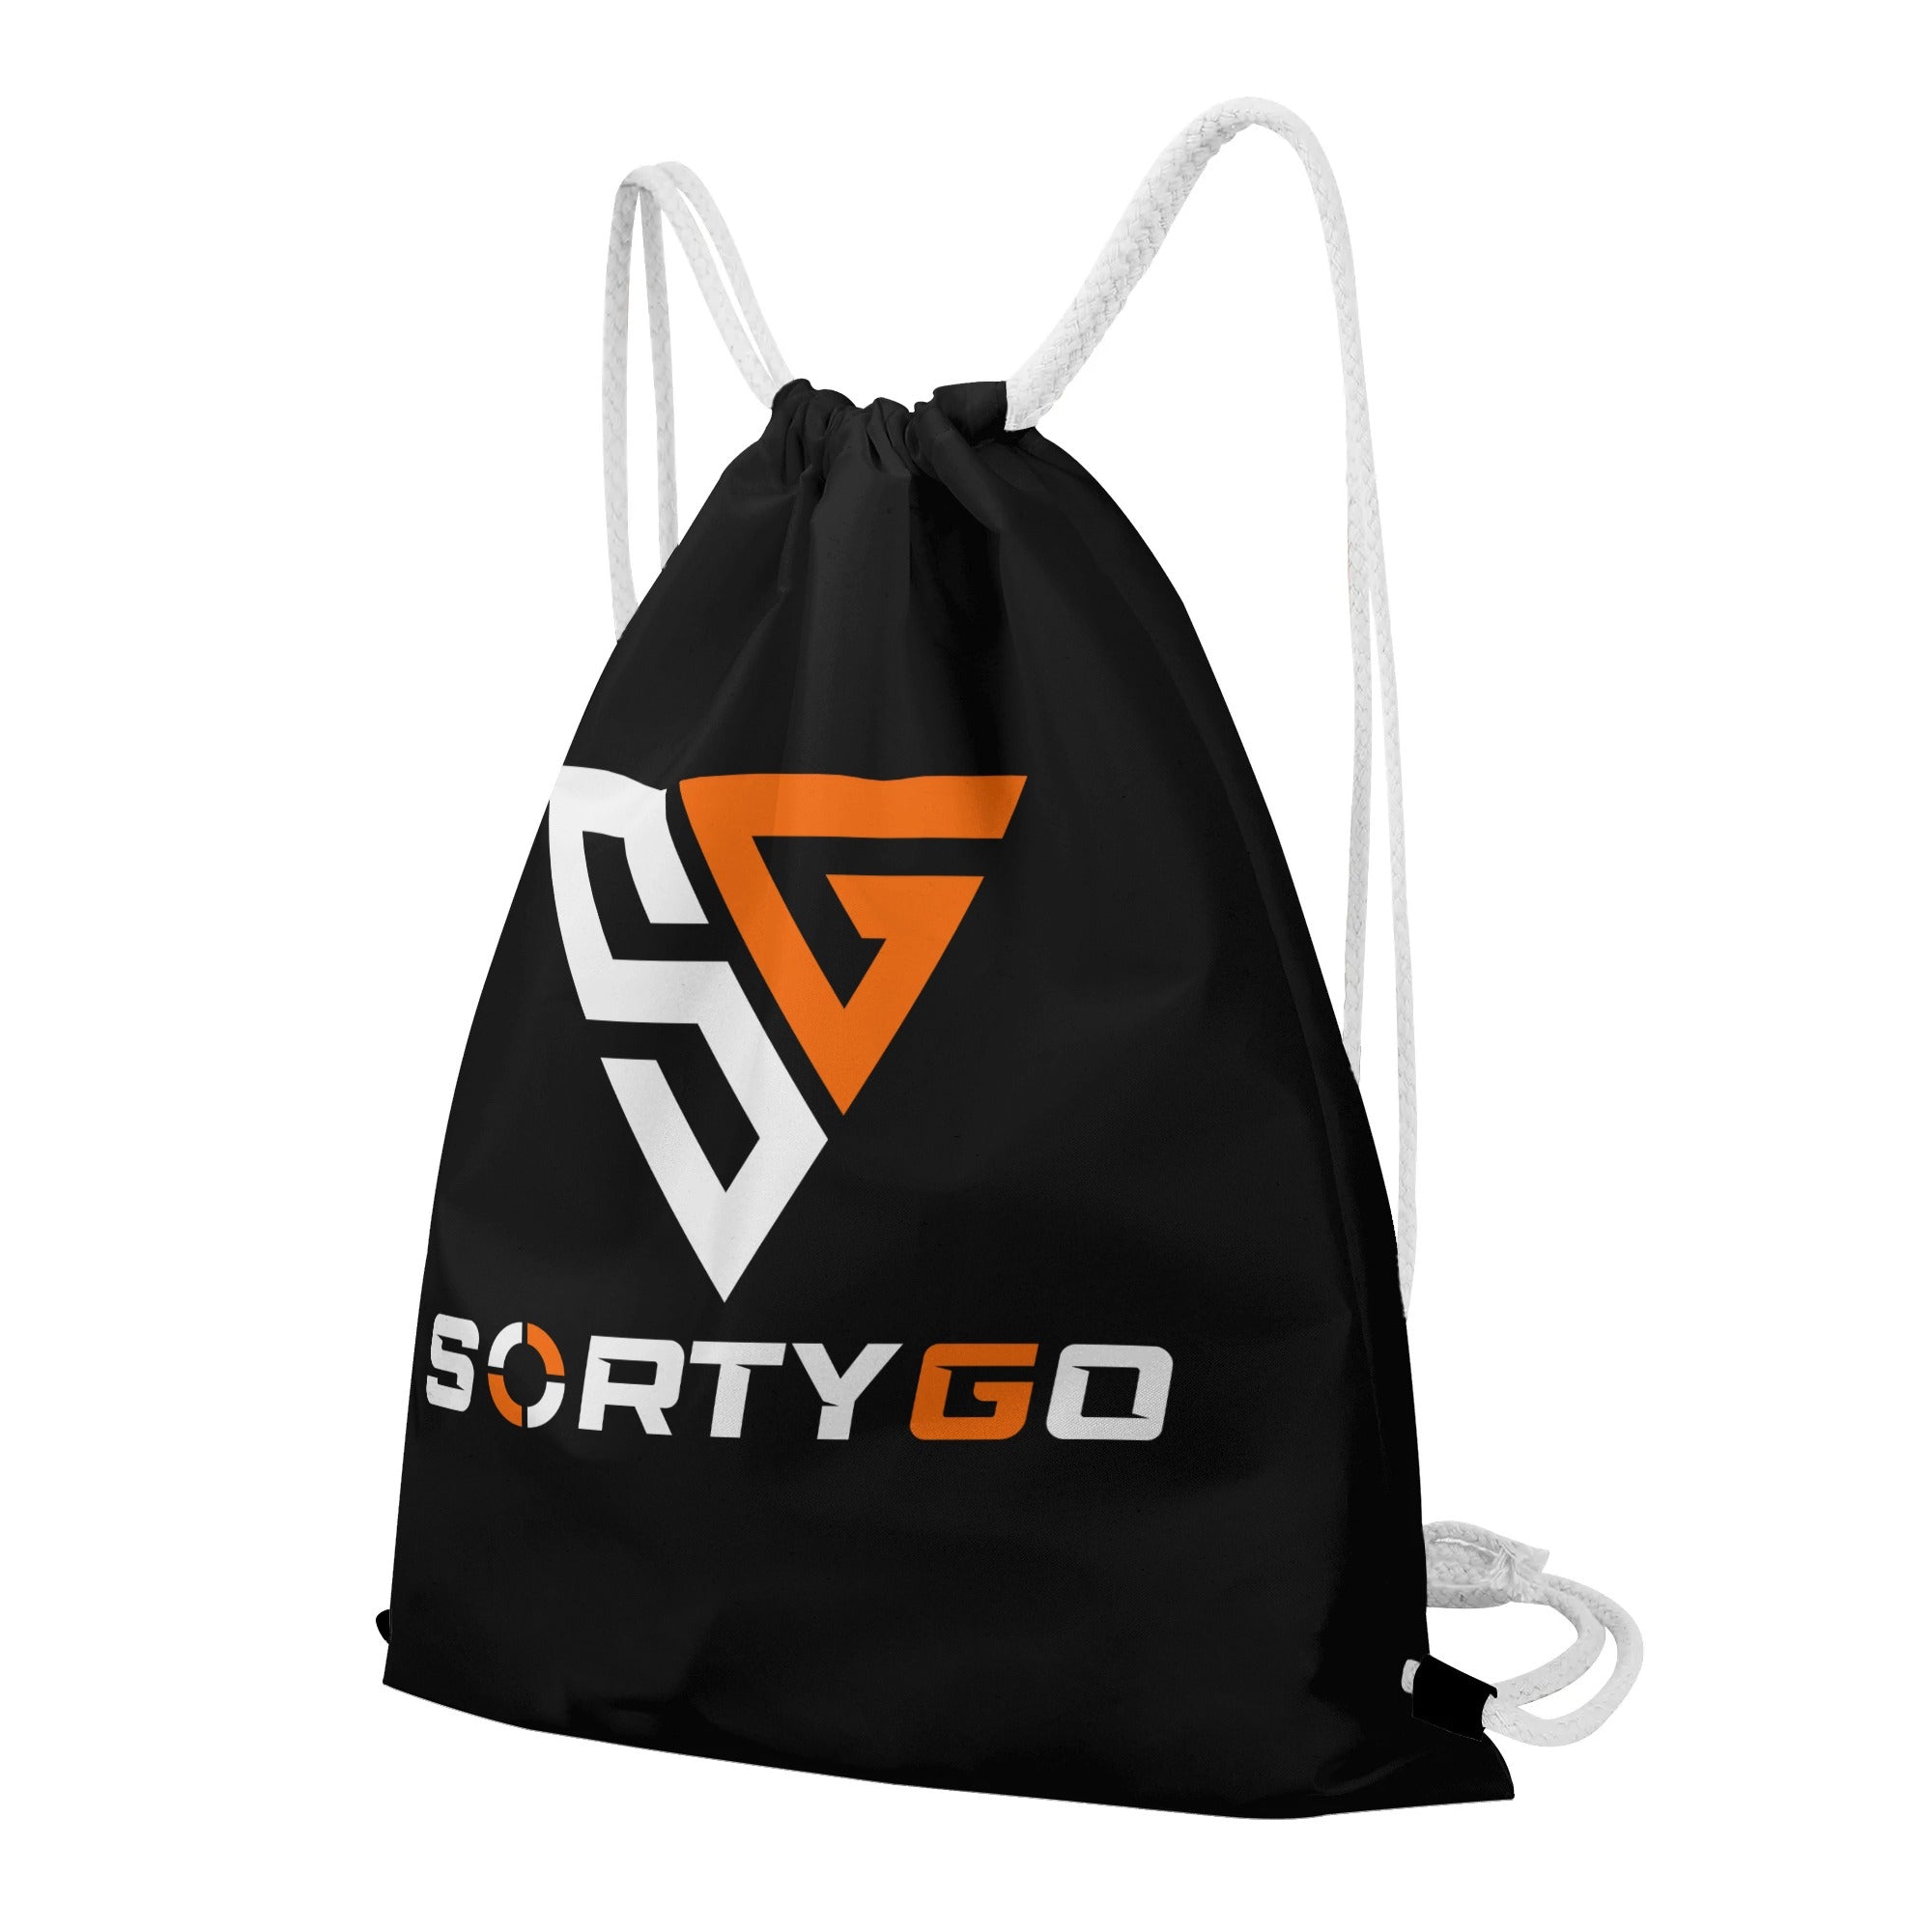 SORTYGO - Oceanic Drawstring Bag in